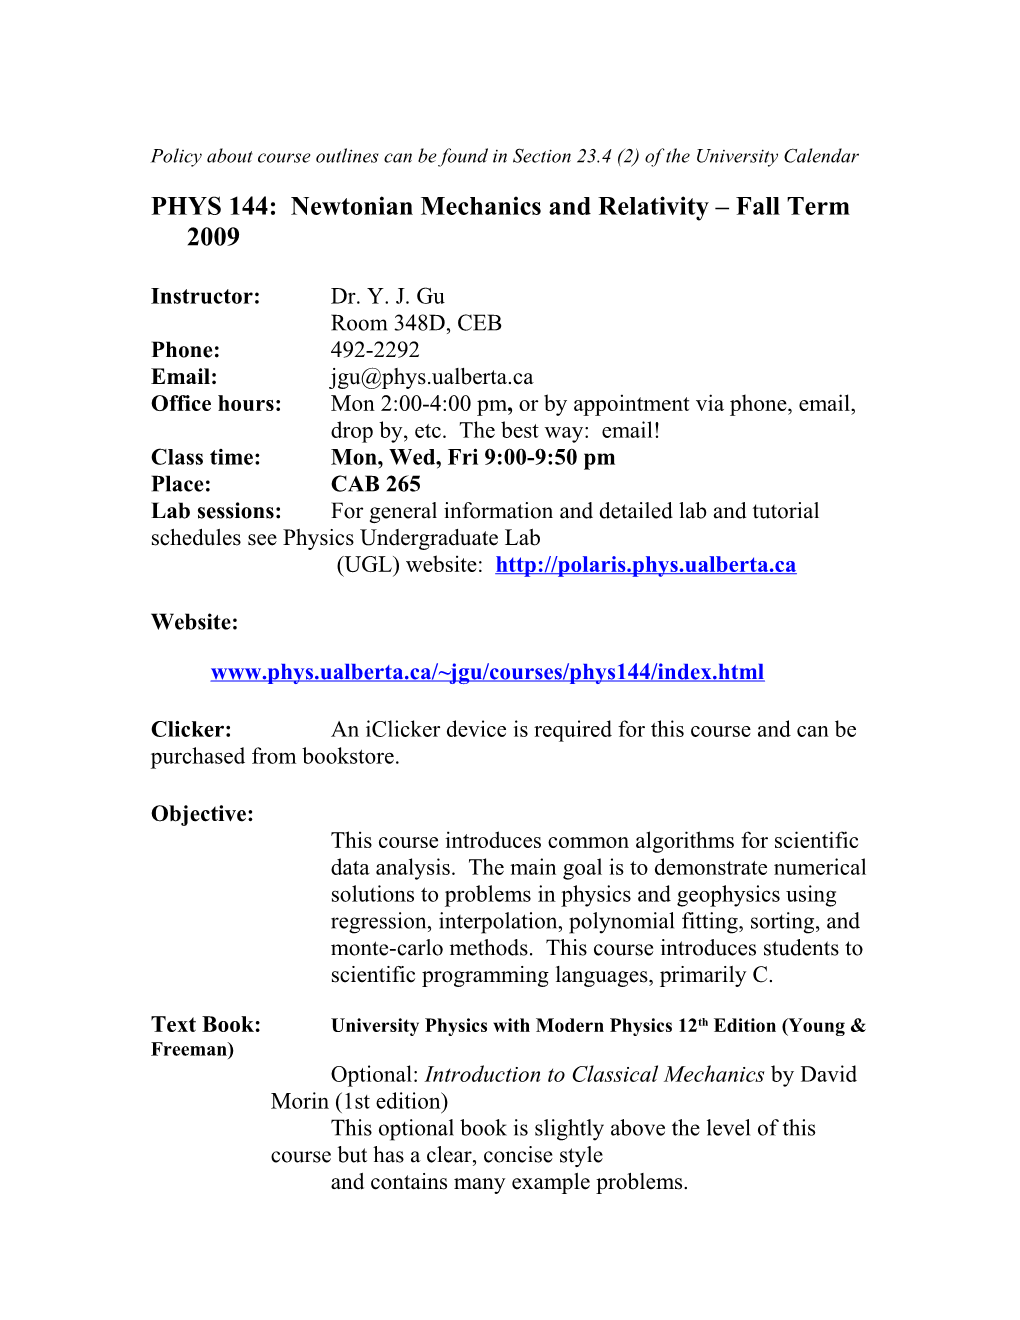 PHYS 144: Newtonian Mechanics and Relativity Fall Term 2009